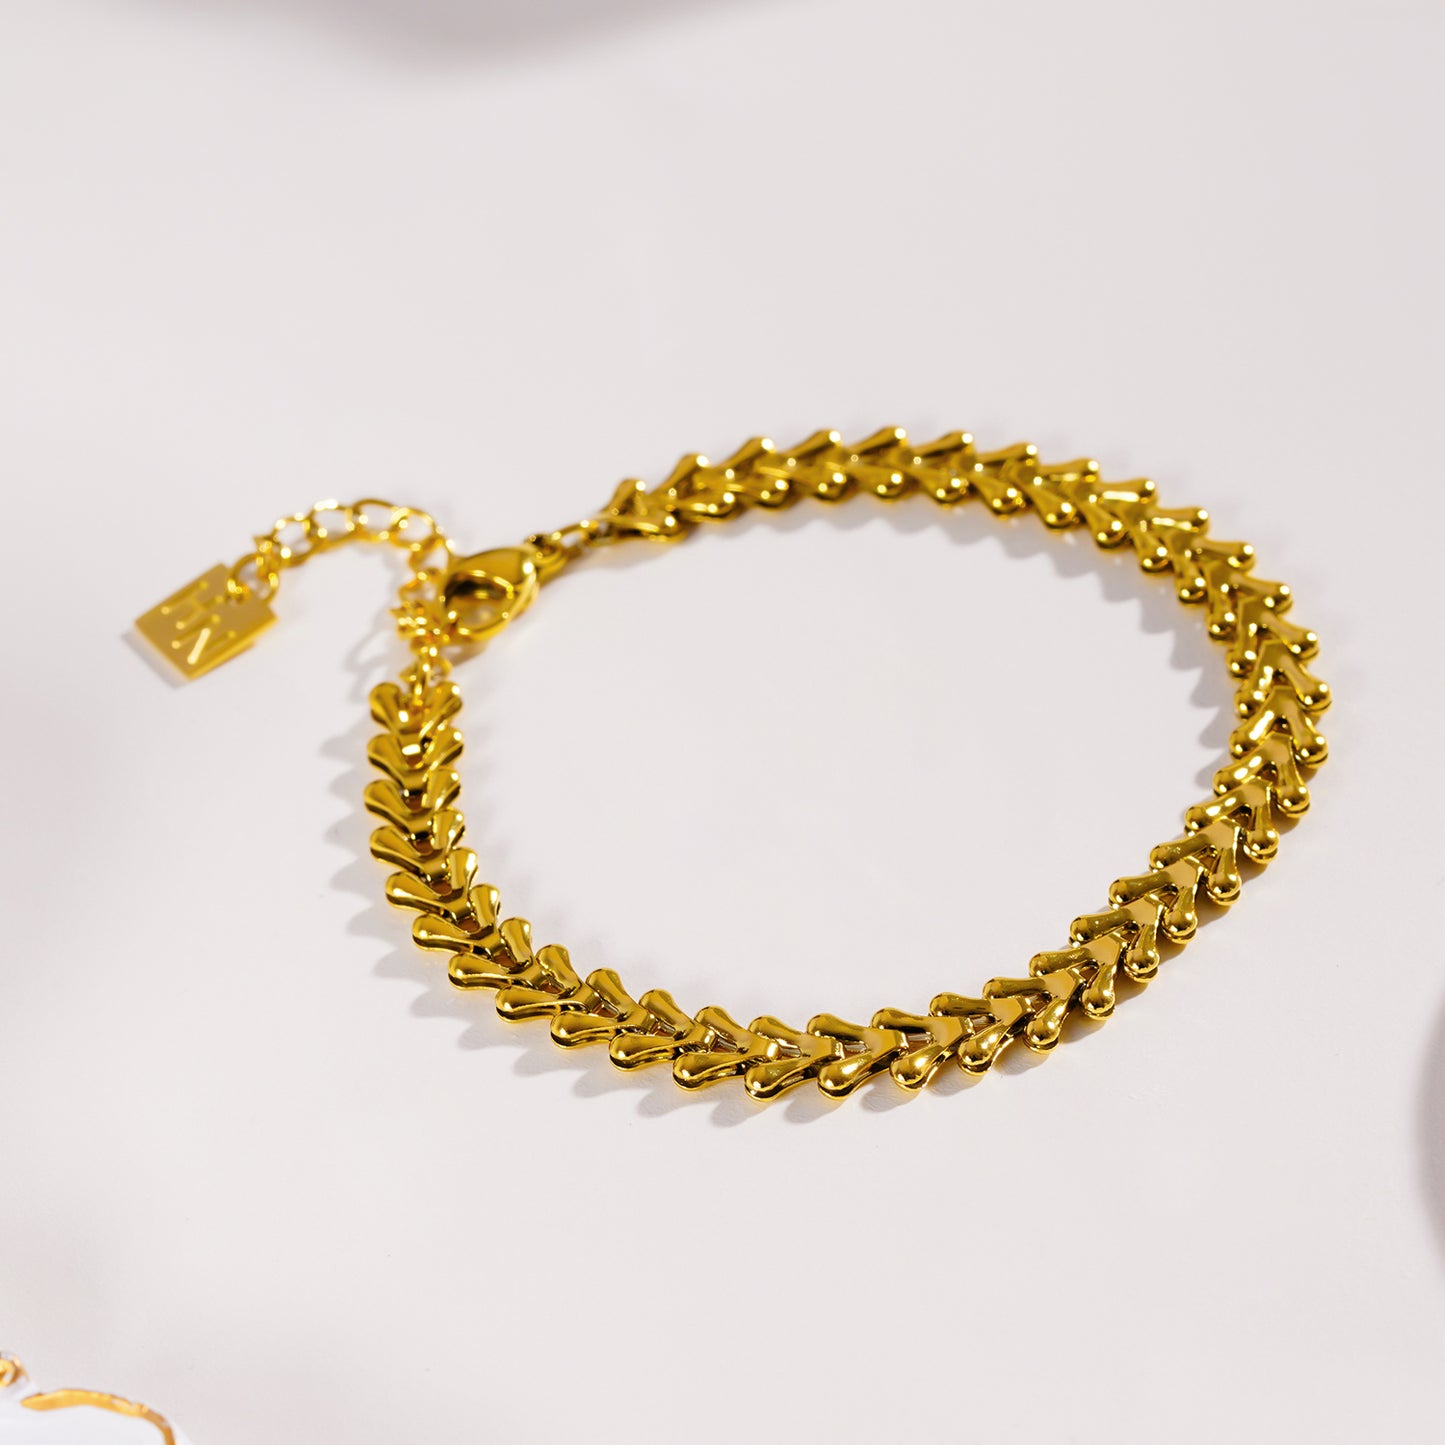 Style BLYTH 0300:  Vintage-Inspired Linked Abstract Crest Bracelet.